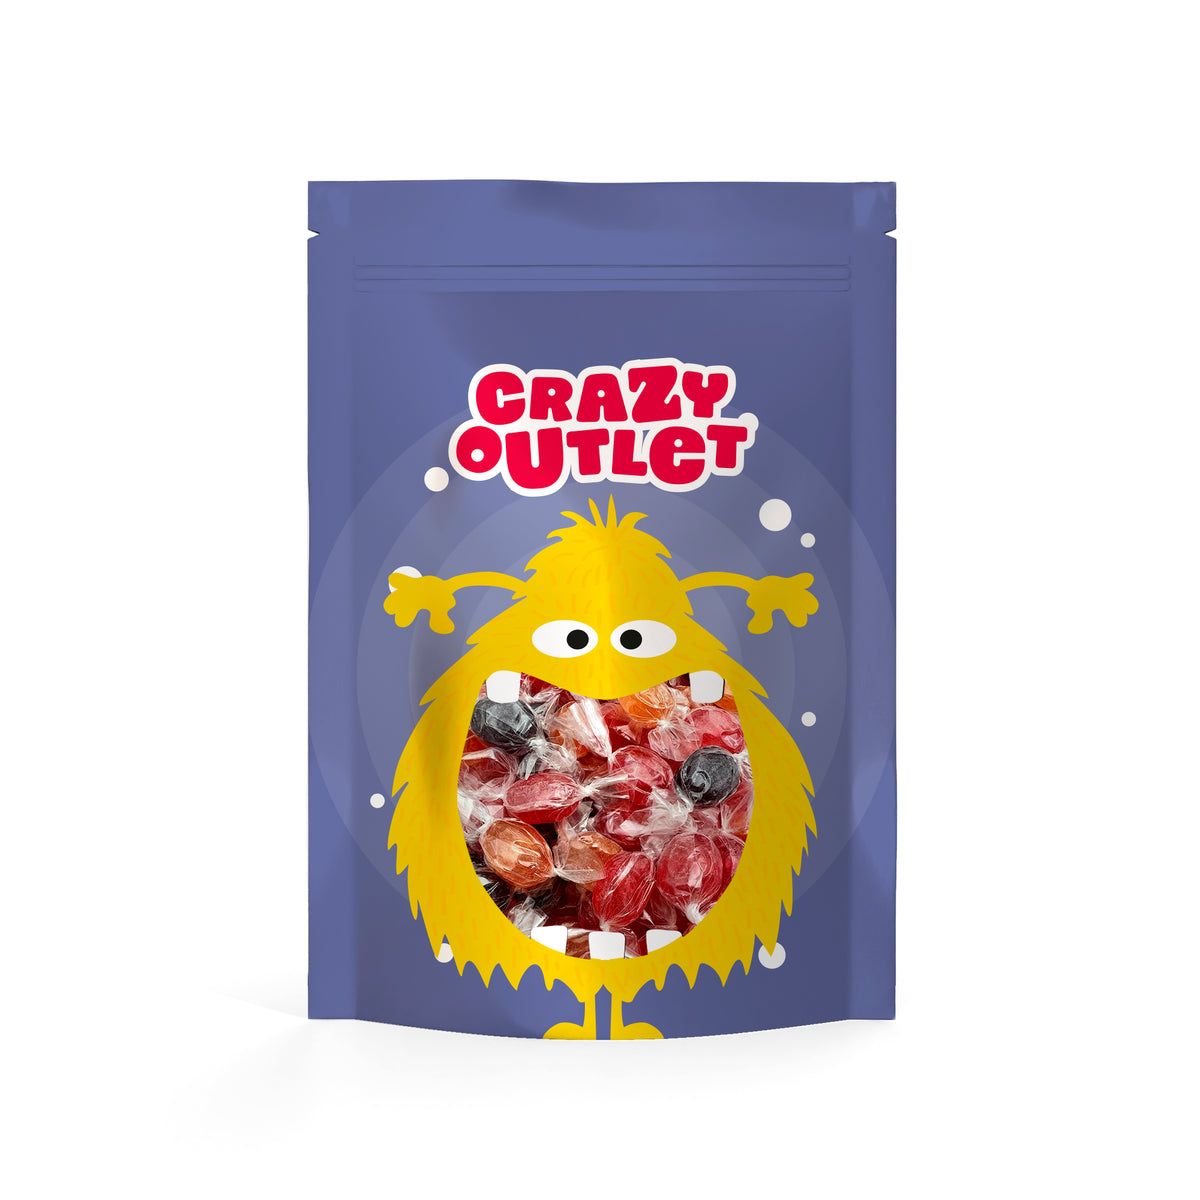  Brach's Sugar Free Gummy Bears, Assorted Fruit